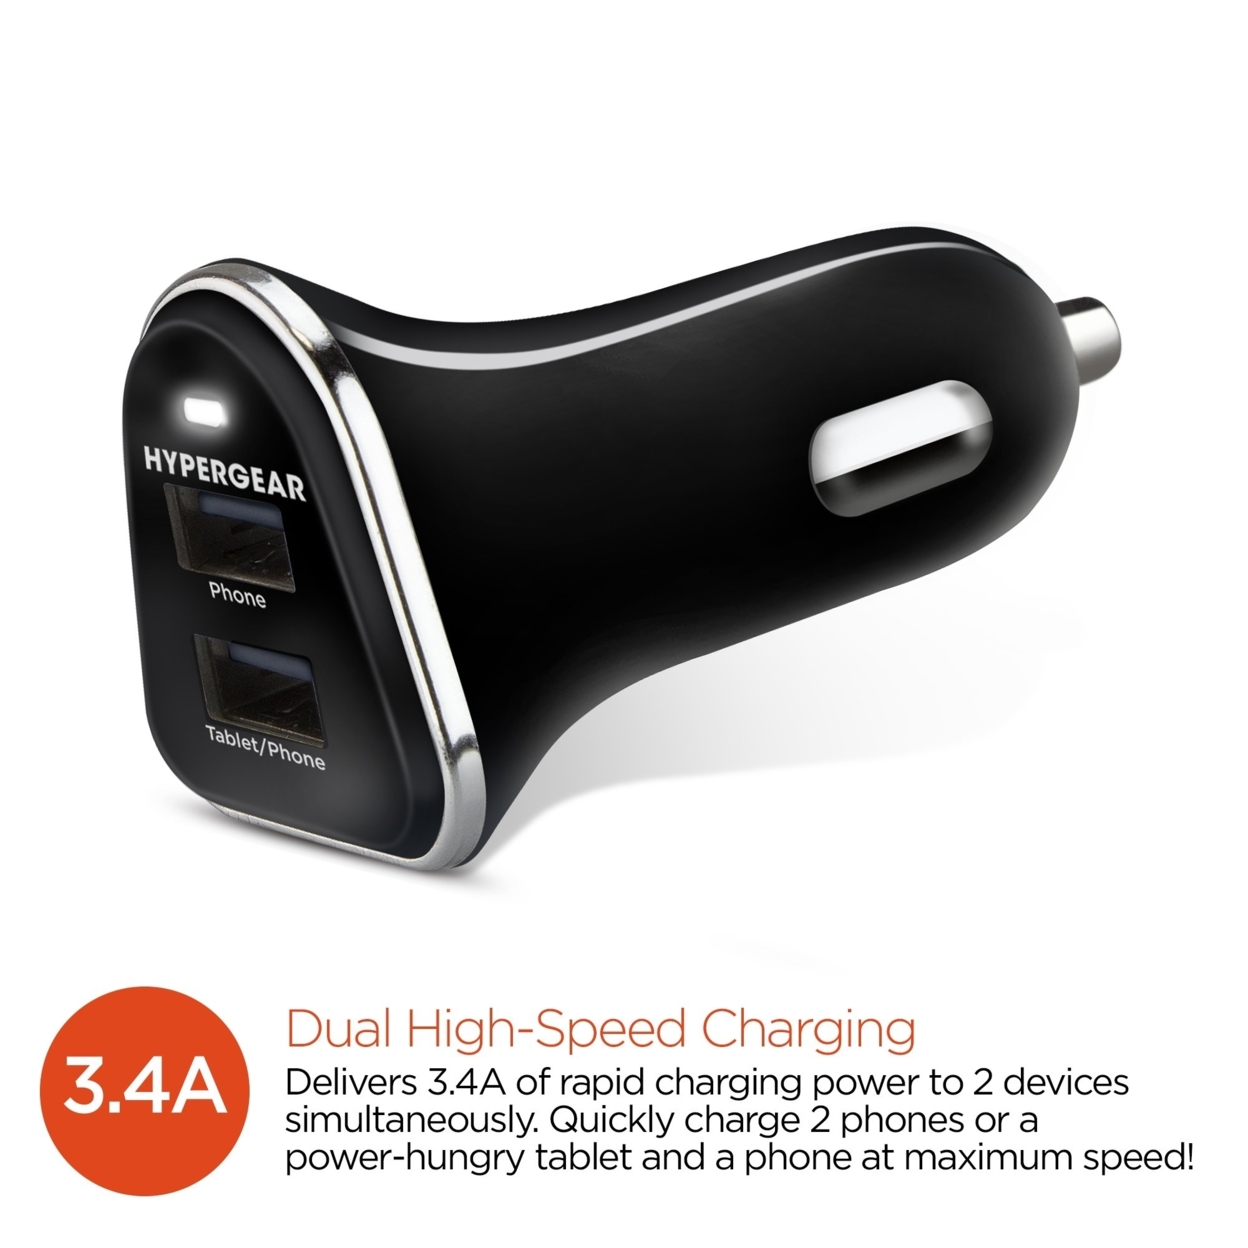 HyperGear Hi-Power Dual USB 3.4A Car Charger (DUSBCHARGER-PRNT) - Black